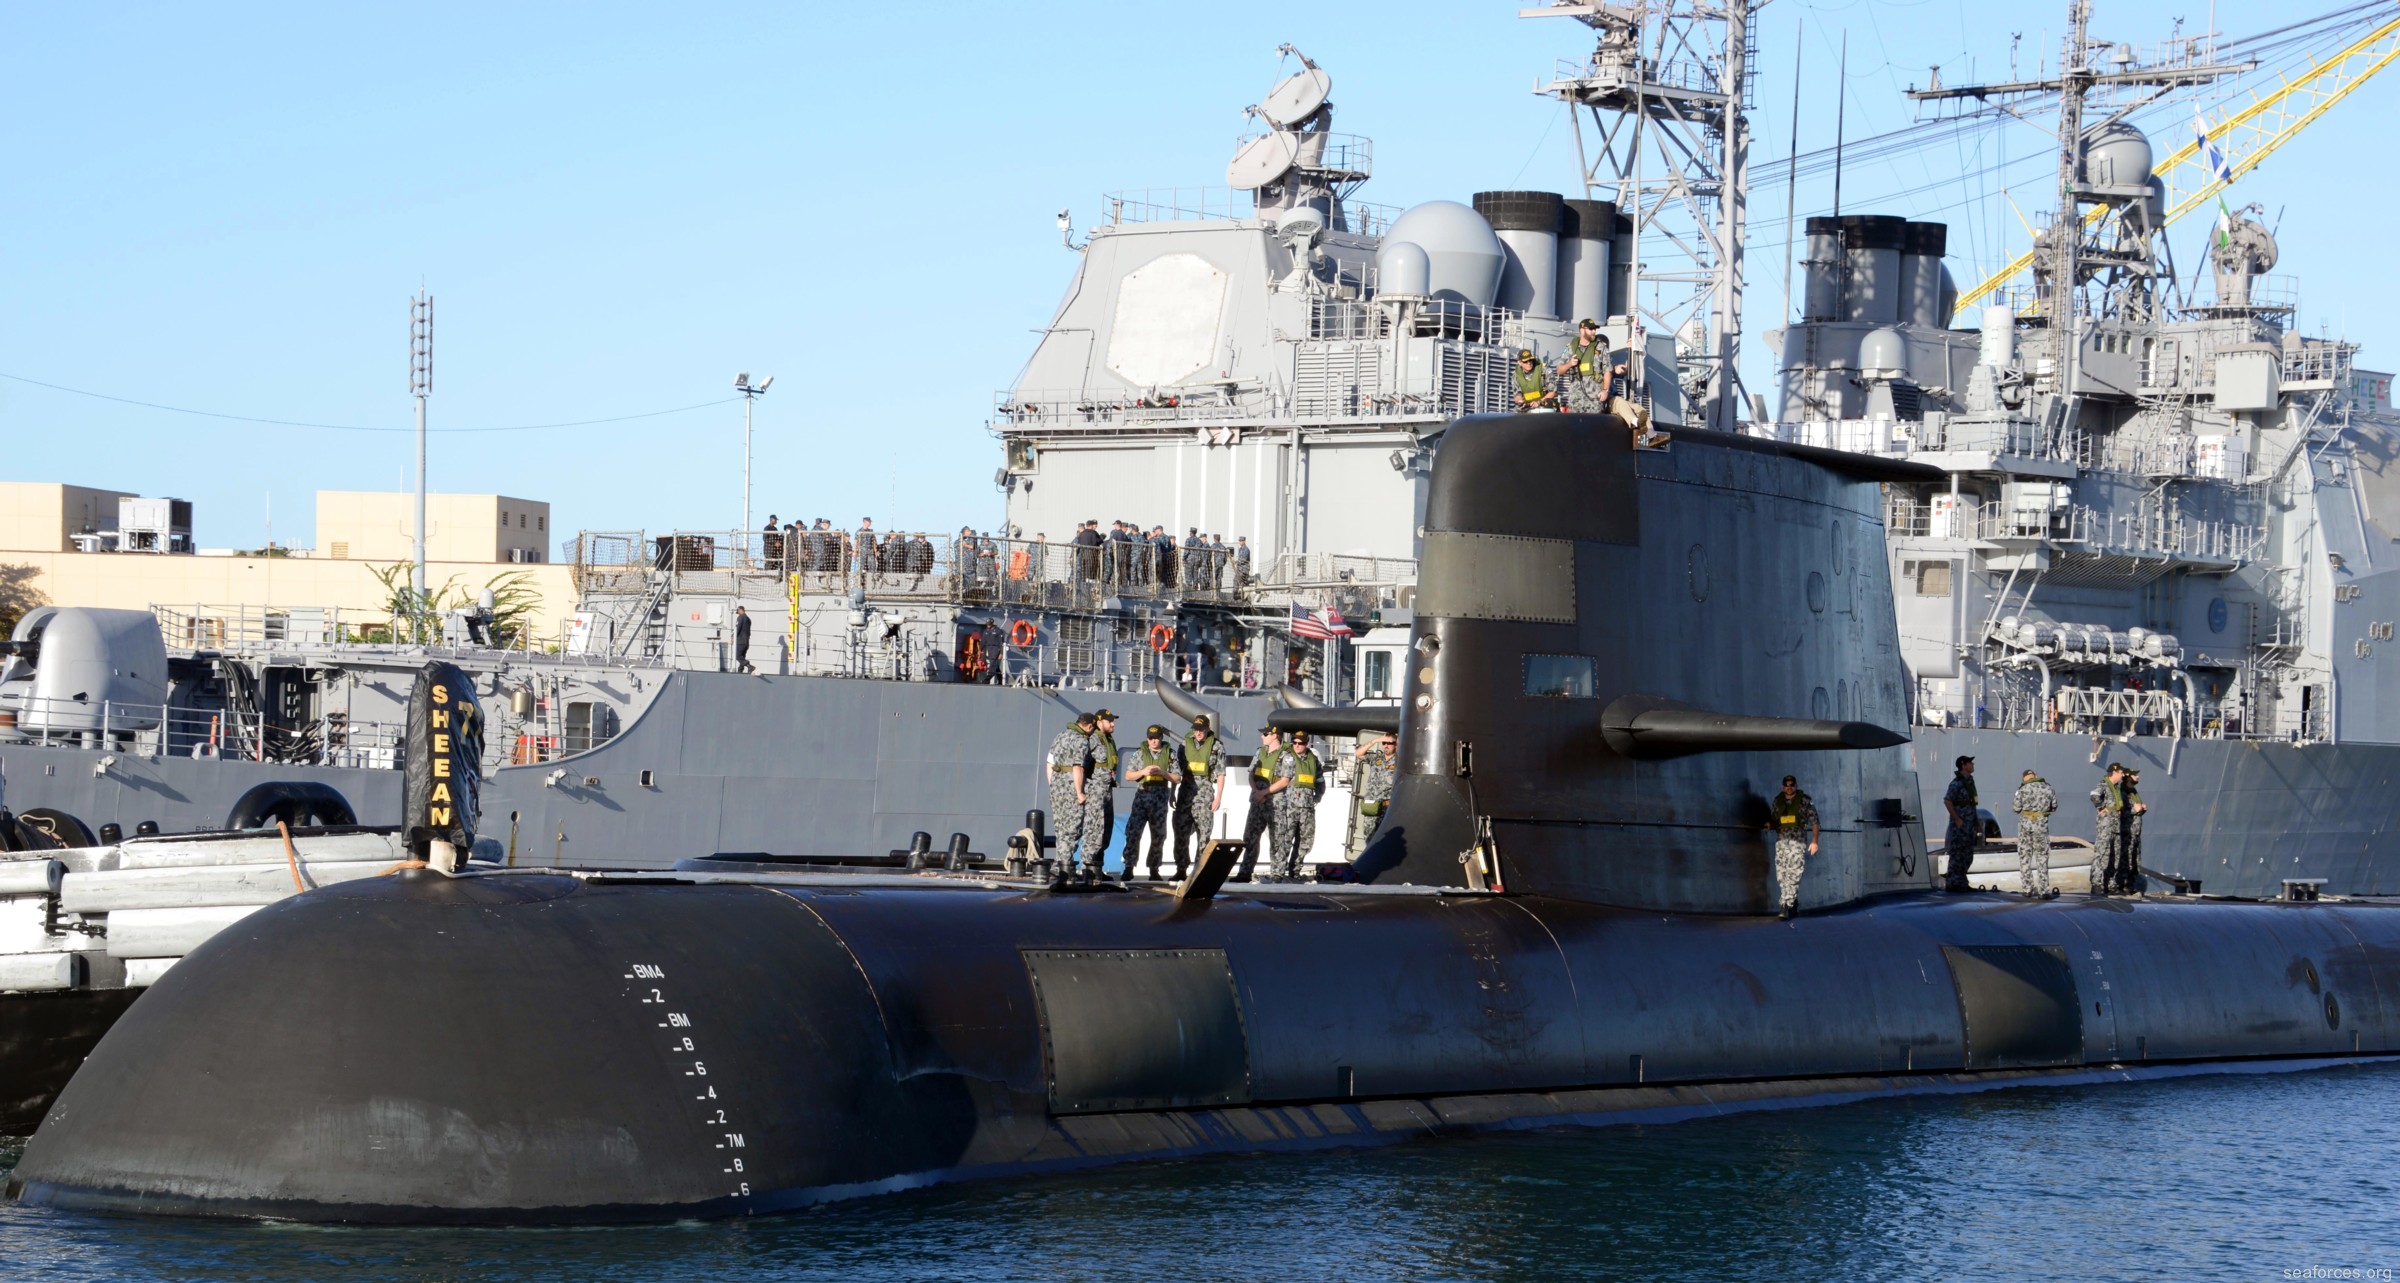 hmas sheean ssg-77 collins class attack submarine ssk royal australian navy 05